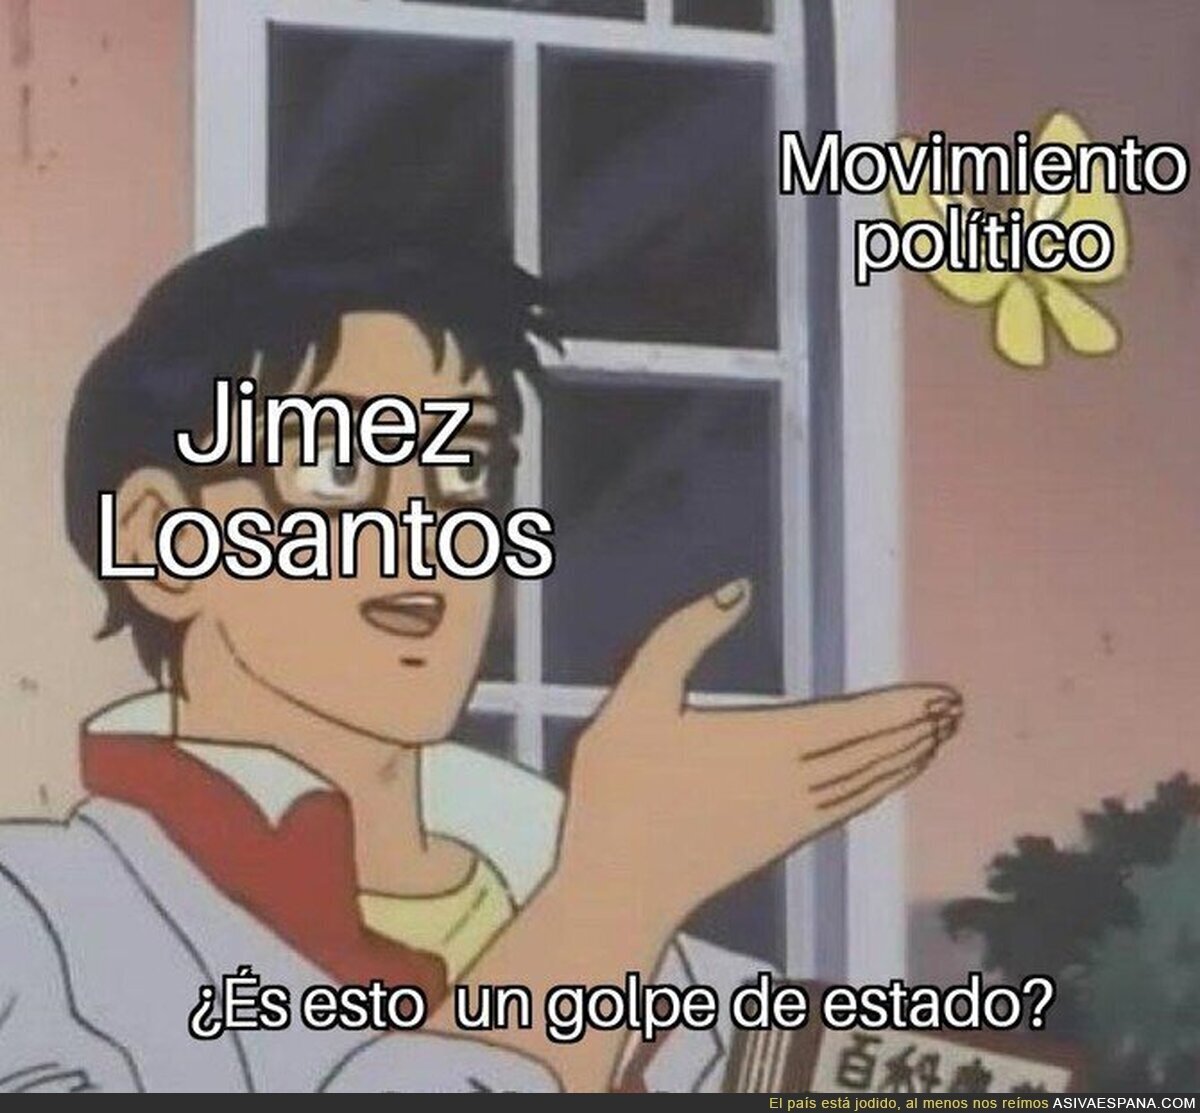 Jiménez Losantos be like